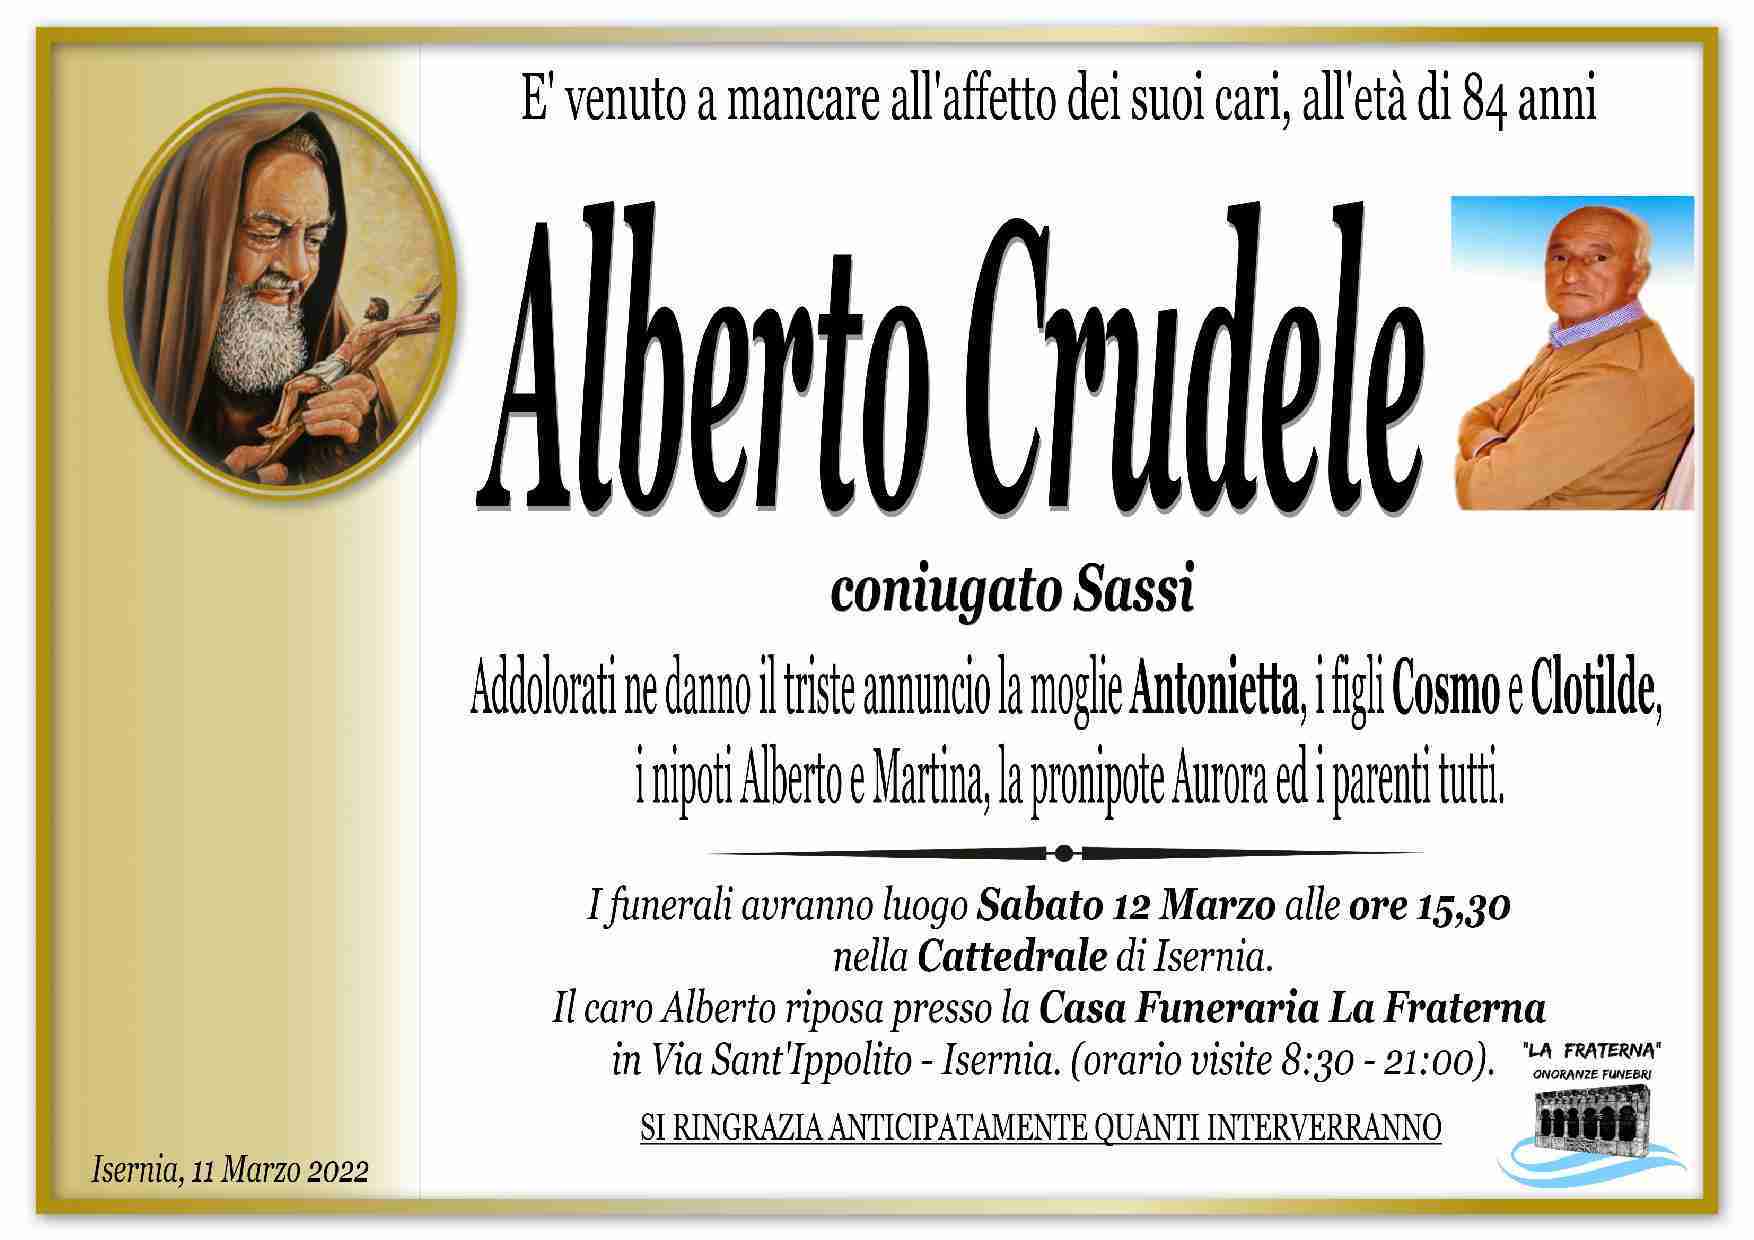 Alberto Crudele